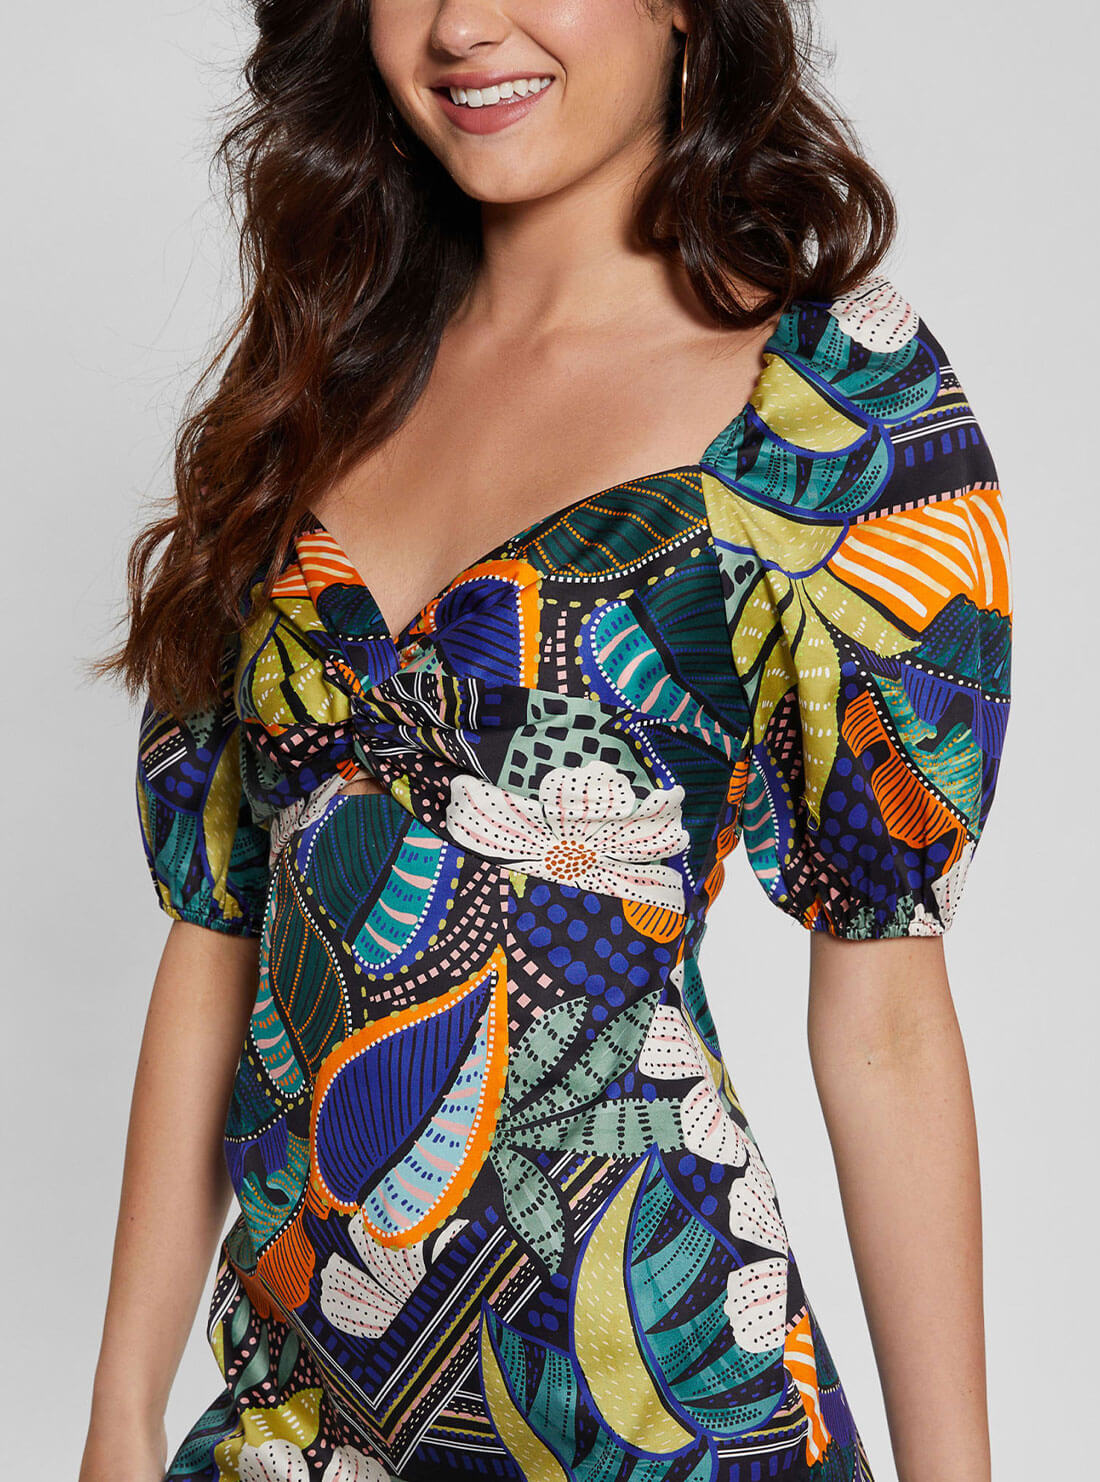 Tropical Print Marisol Puffed Dress | GUESS Women's Apparel | detail view